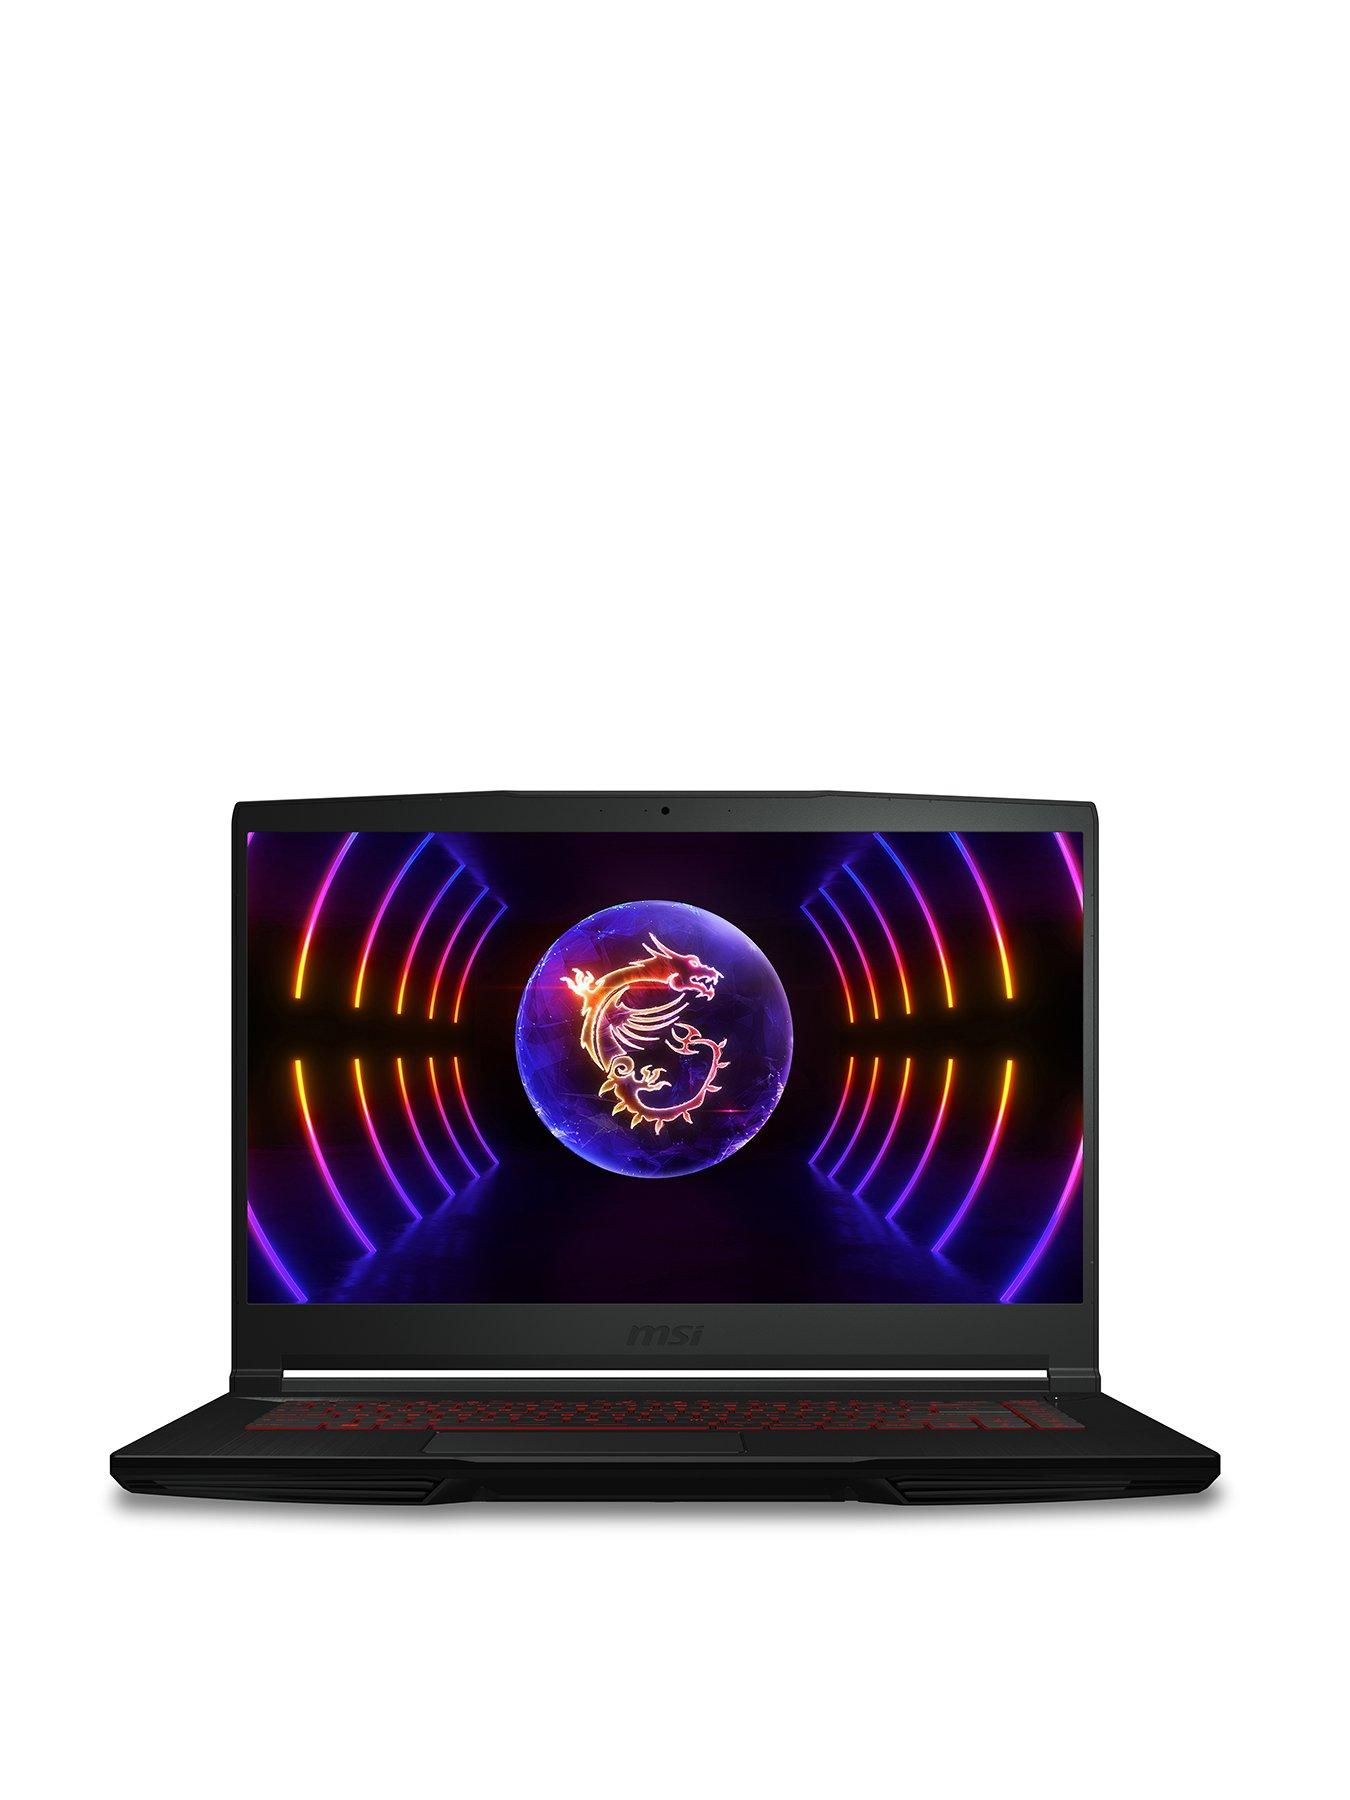 Msi Thin Gf63 Gaming Laptop - 15.6In Fhd, Geforce Rtx 2050, Intel Core I5, 16Gb Ram, 512Gb Ssd